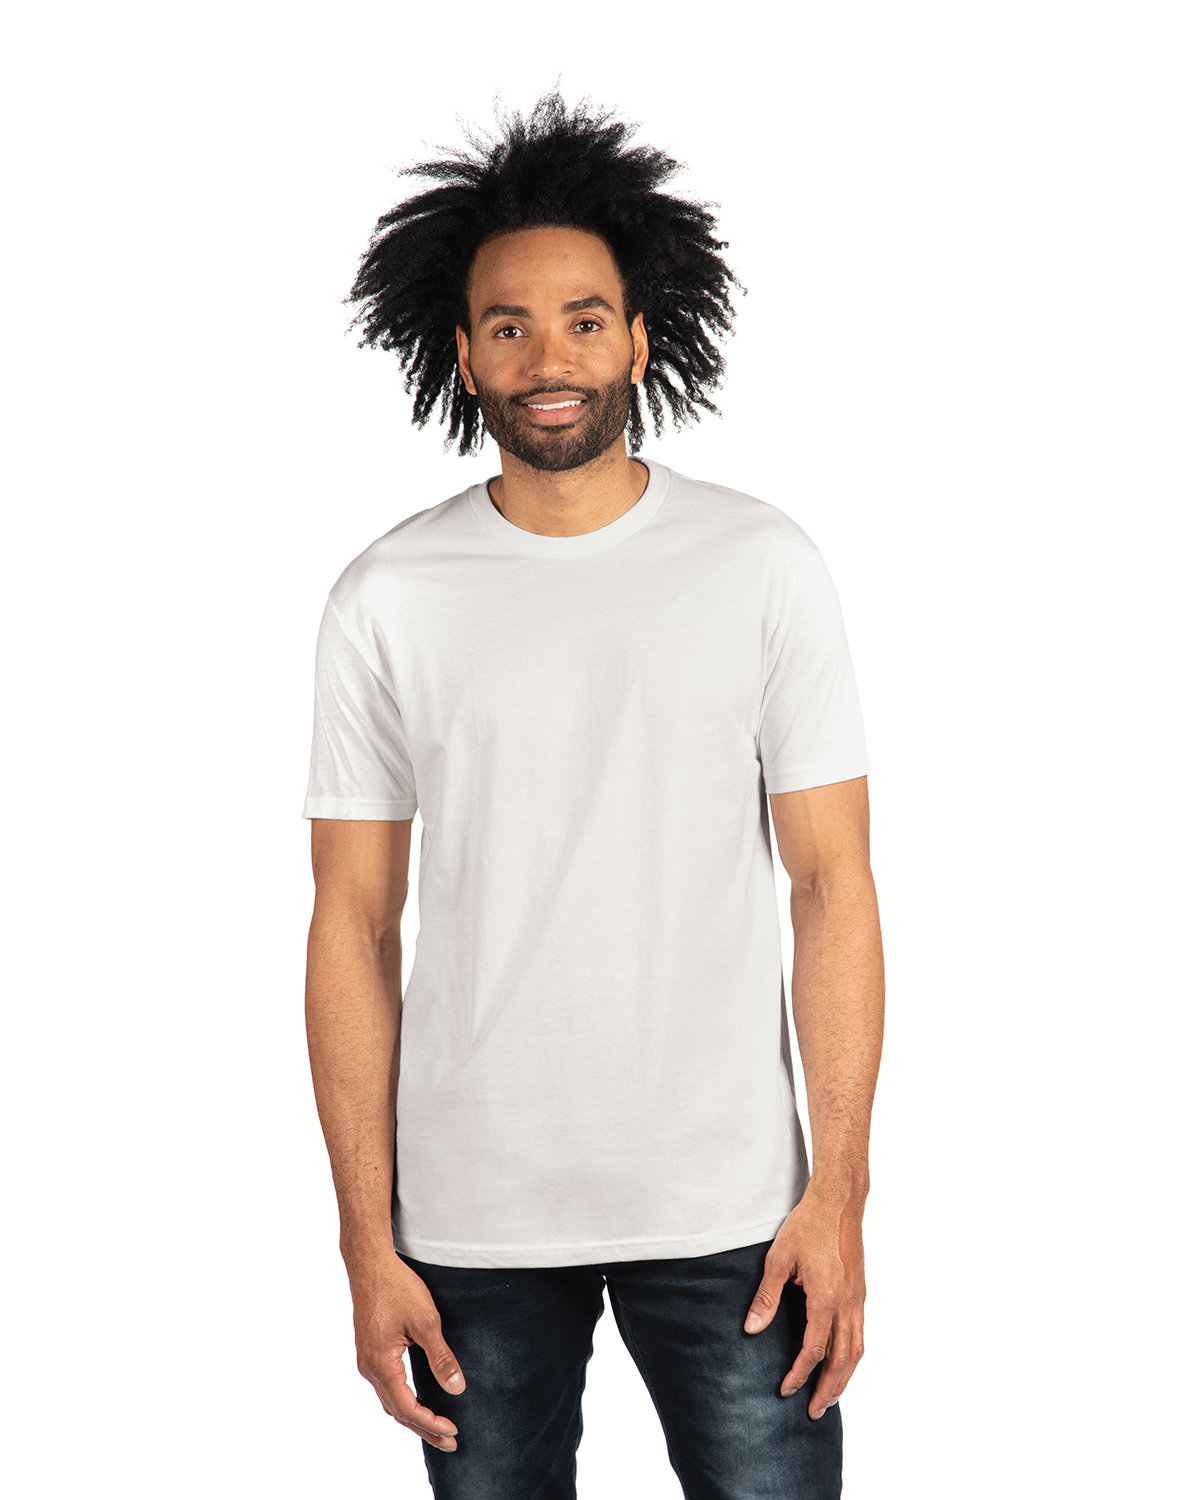 Next Level Unisex Cotton T-Shirt WHITE 